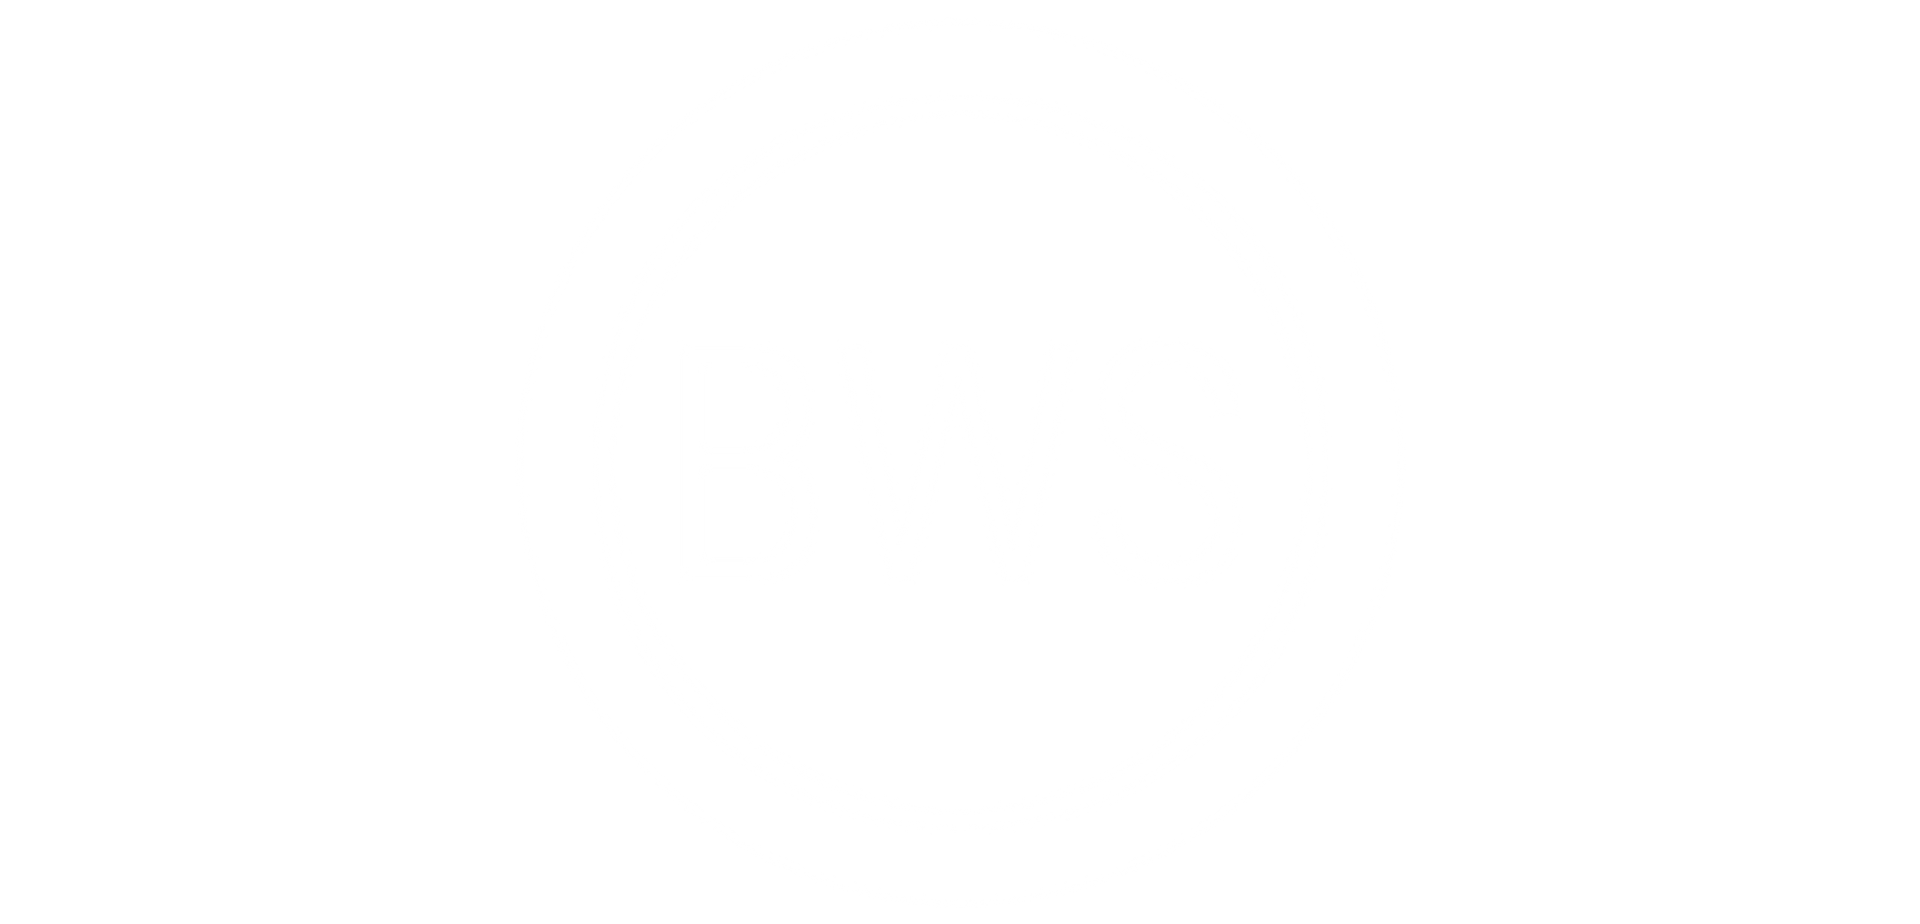 Official Black Wall Street logo